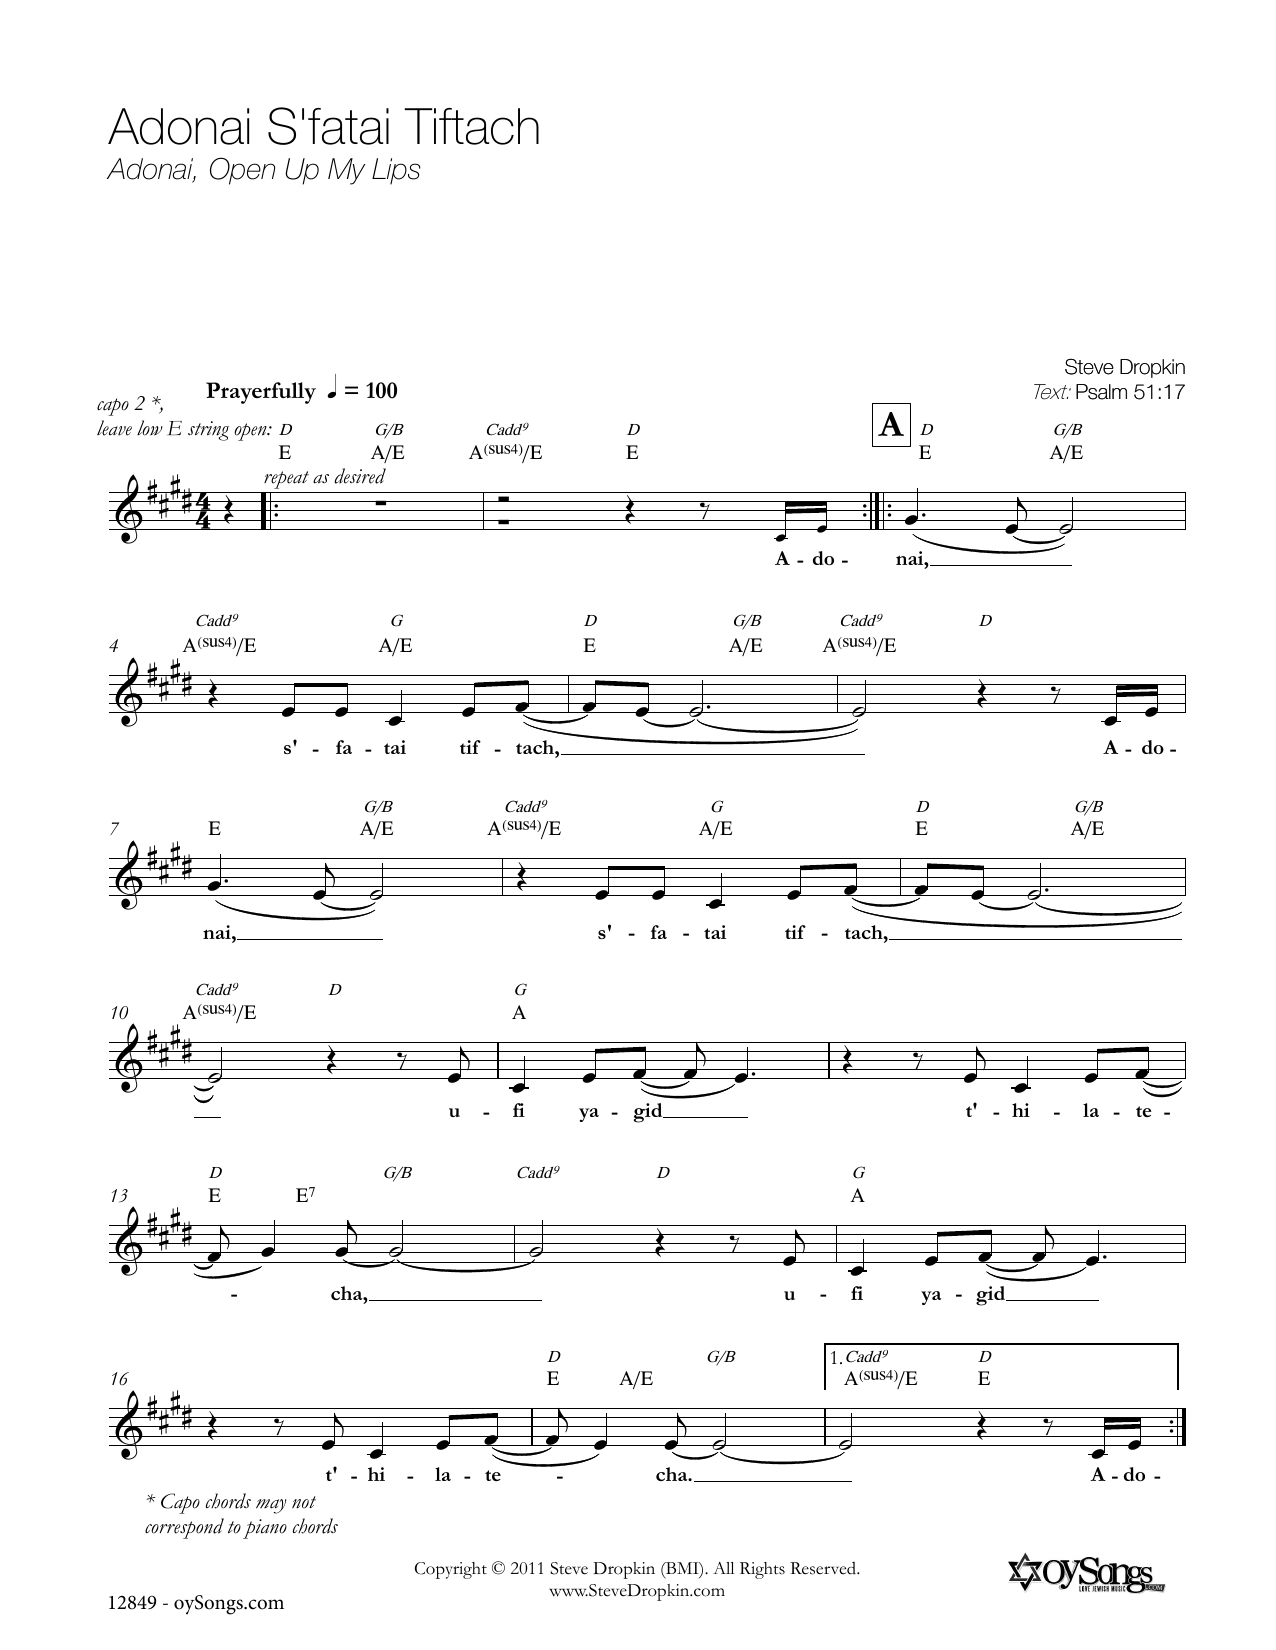 Download Steve Dropkin Adonai S'fatai Tiftach Sheet Music and learn how to play Melody Line, Lyrics & Chords PDF digital score in minutes